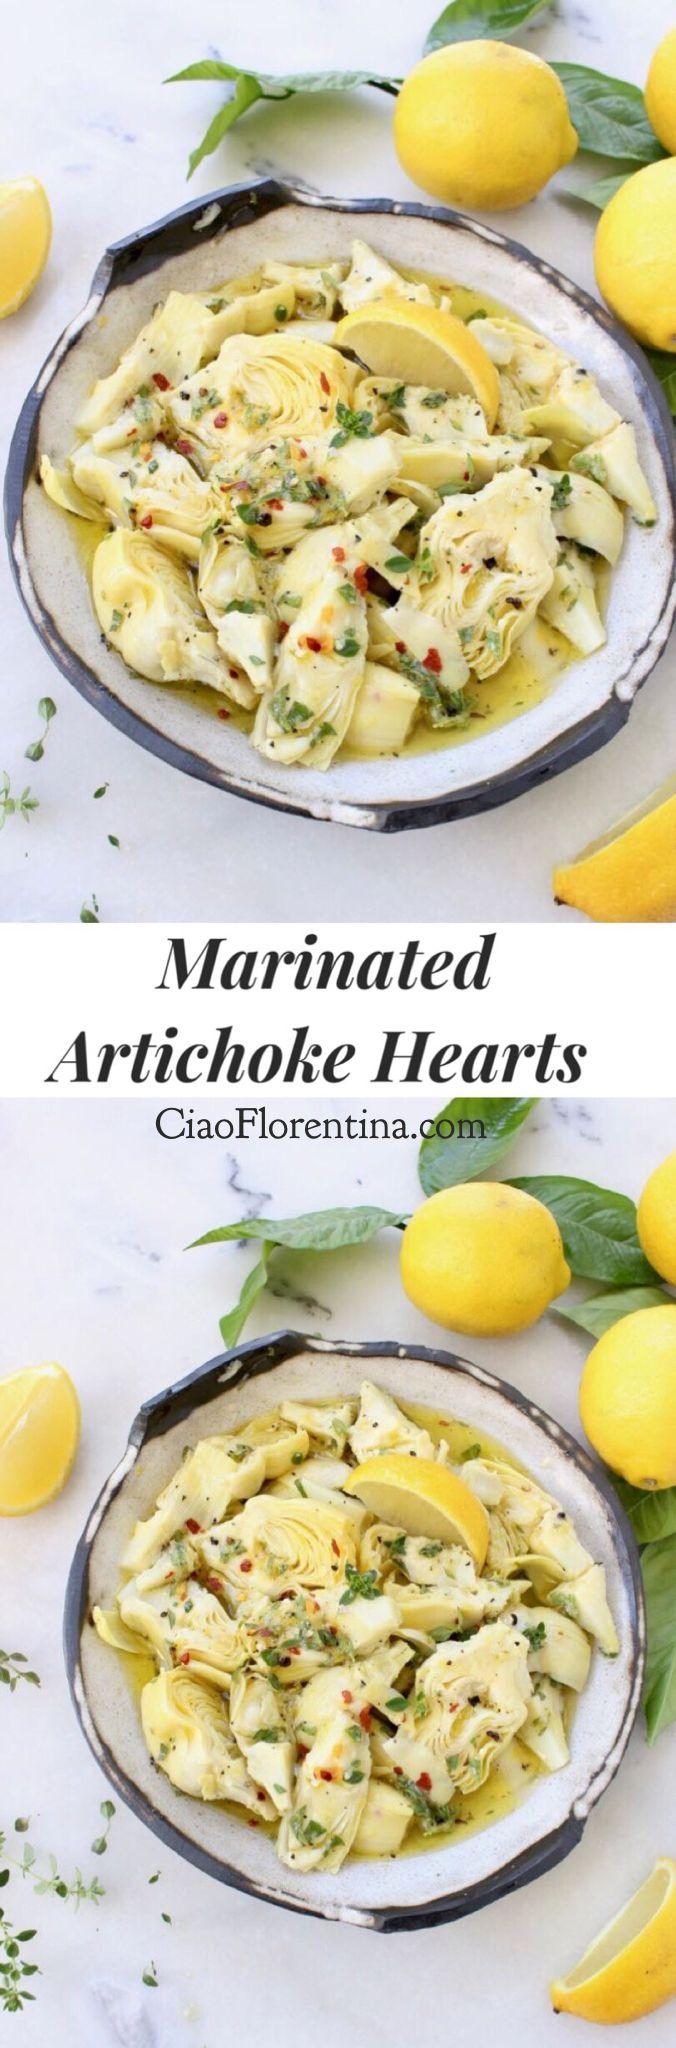 Wedding - Marinated Artichoke Hearts